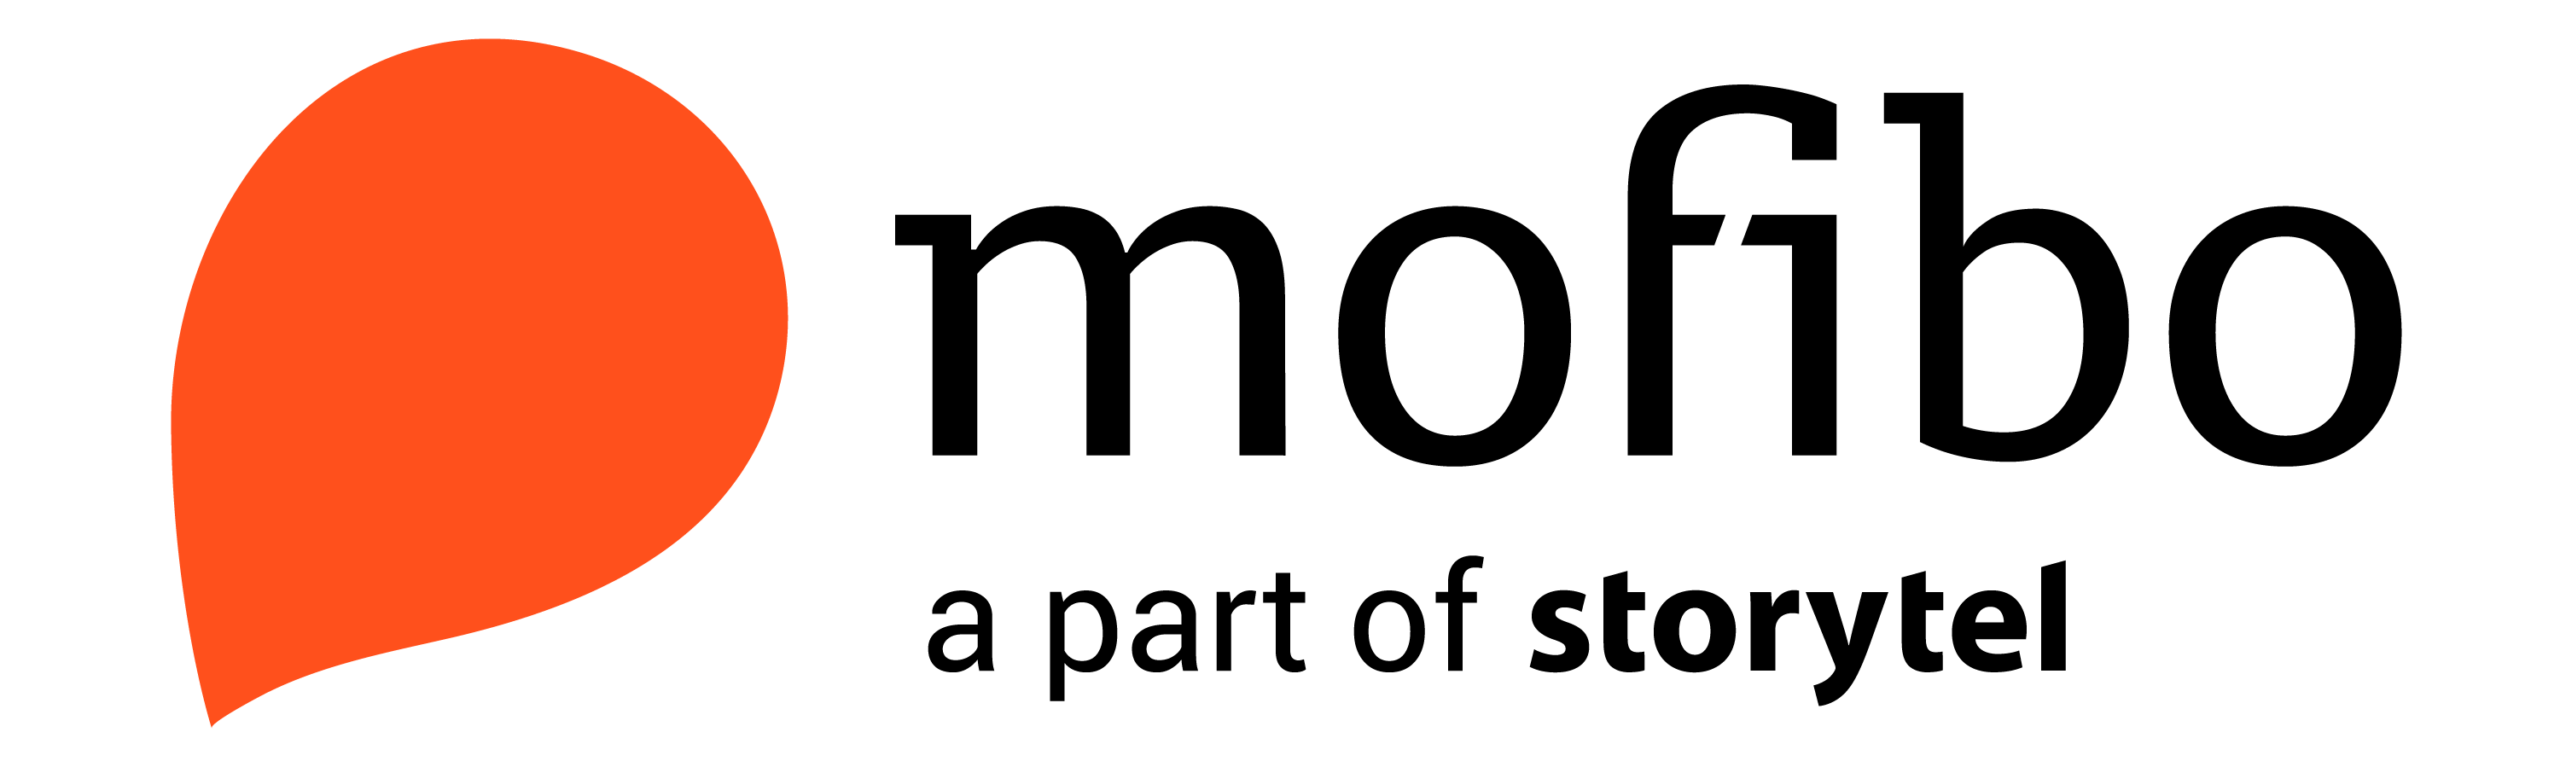 mofibo logo